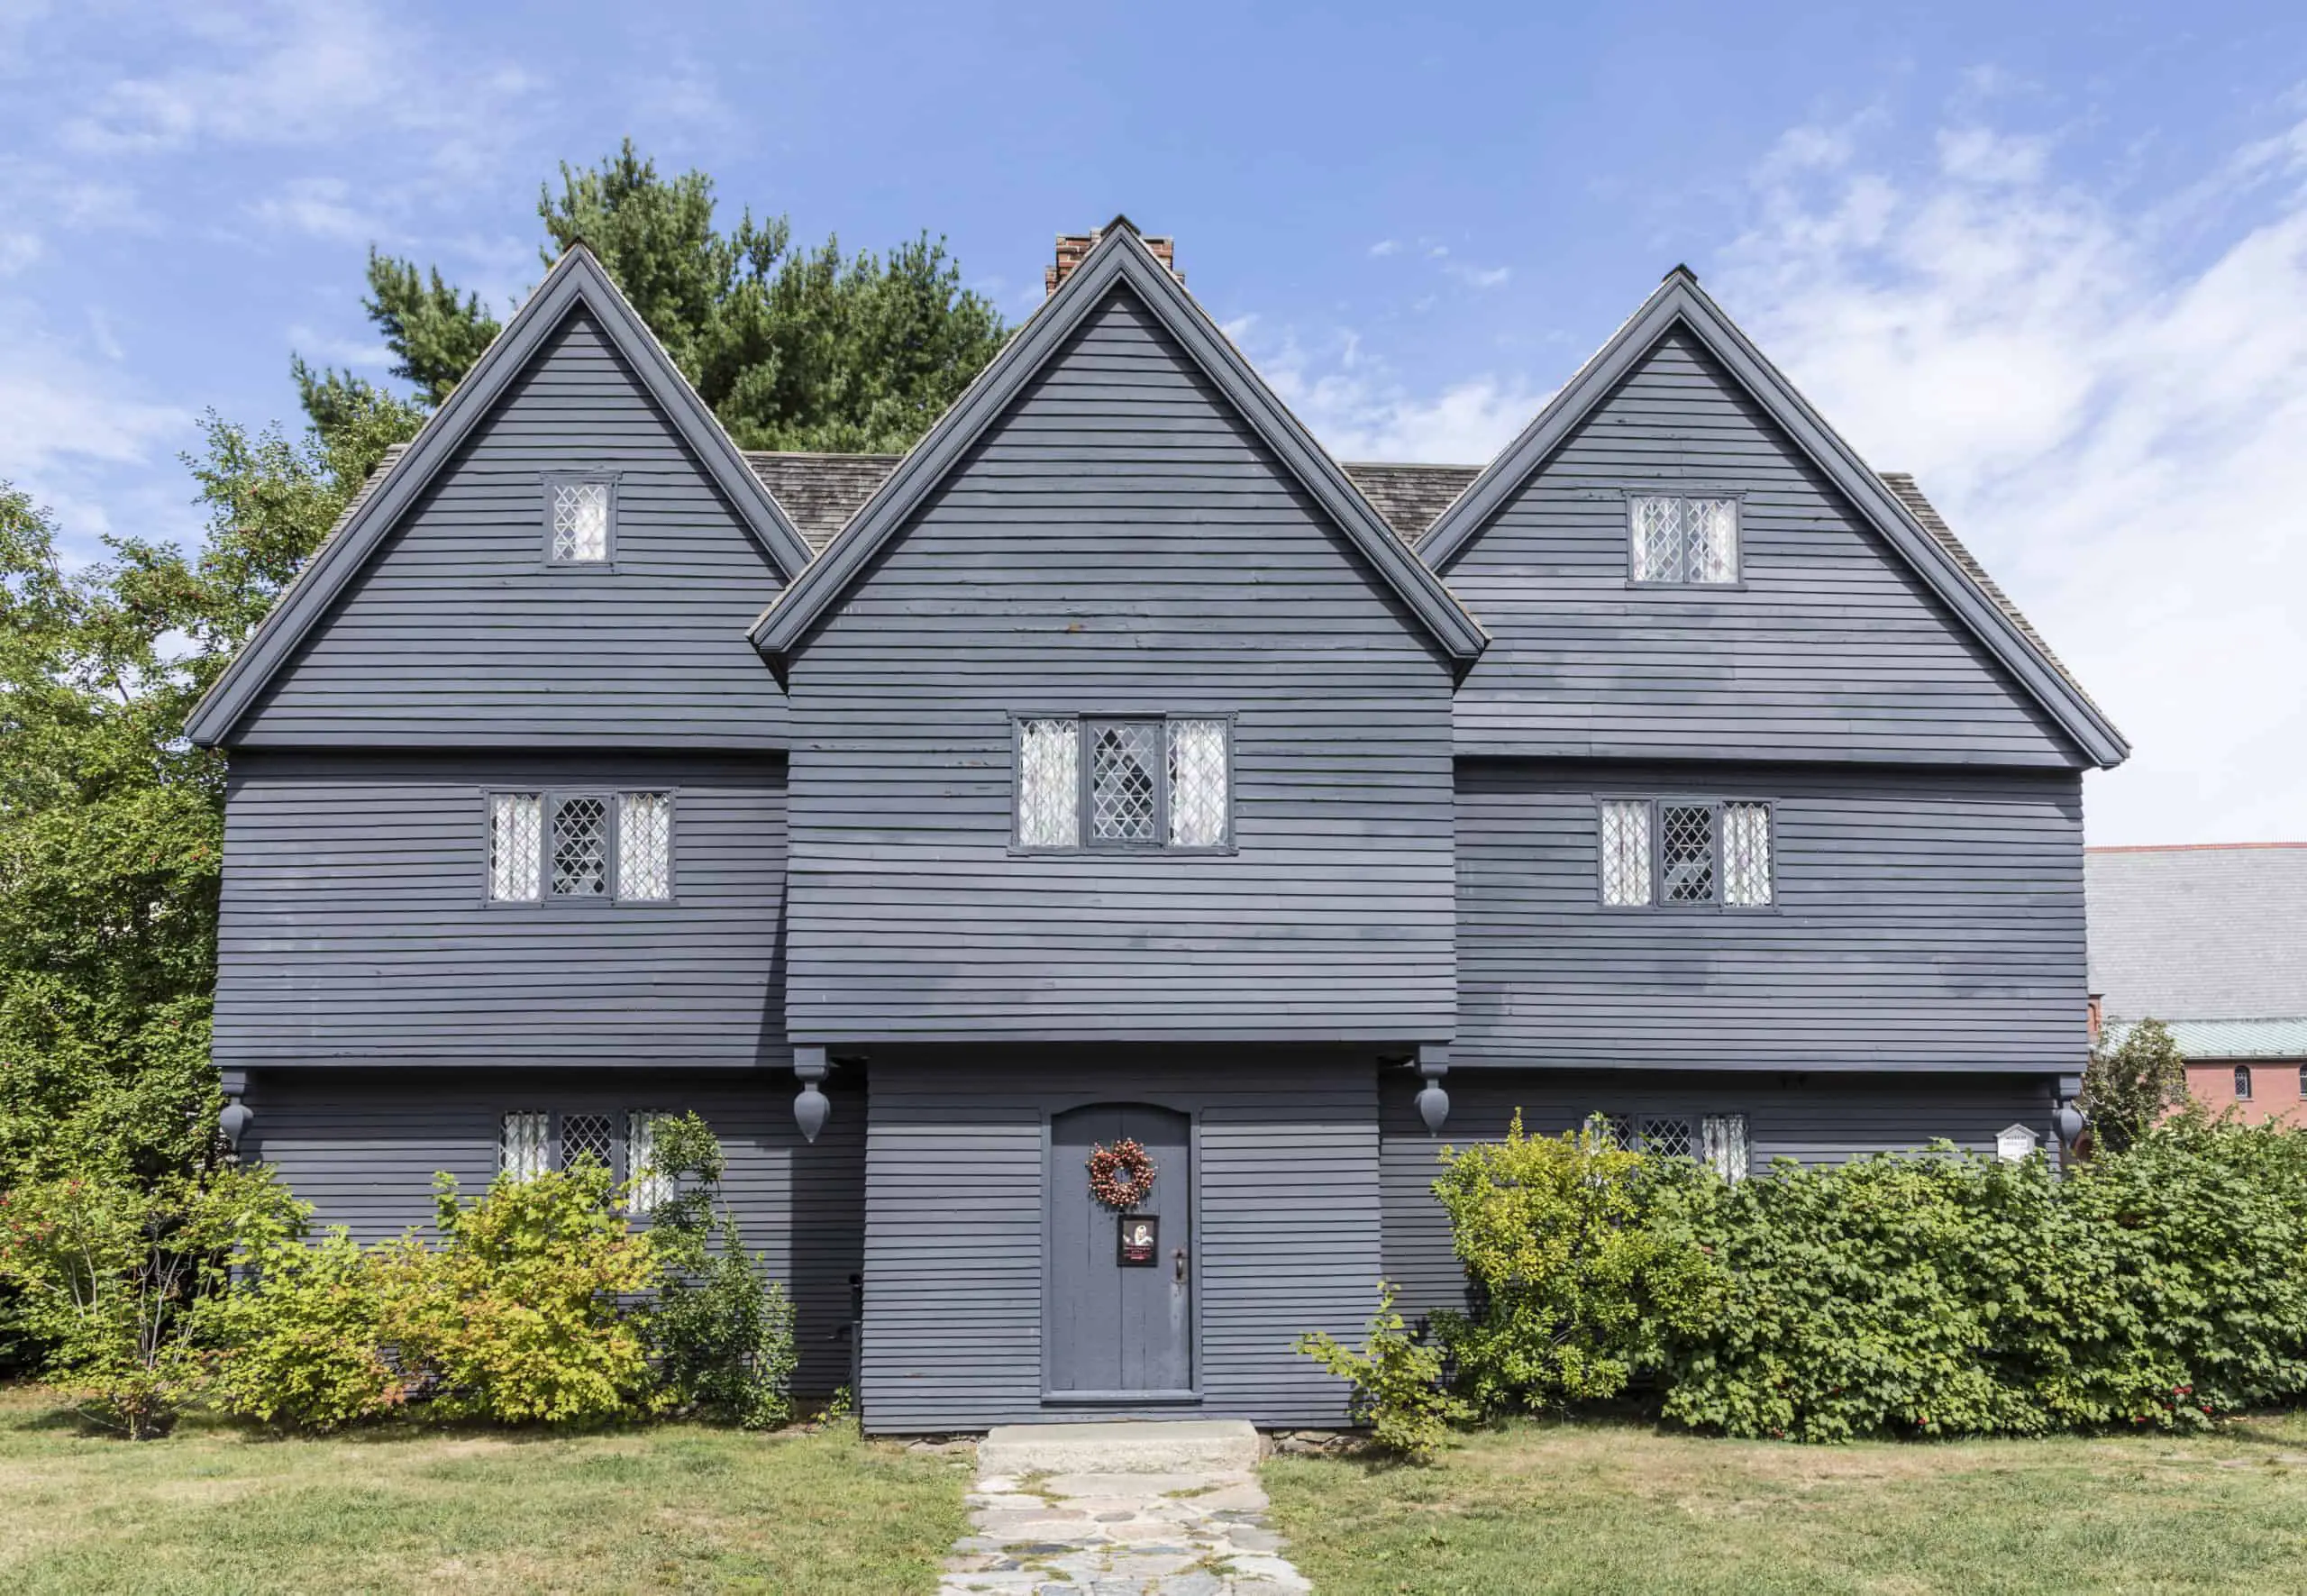 Witch House, Salem, Massachusetts, USA